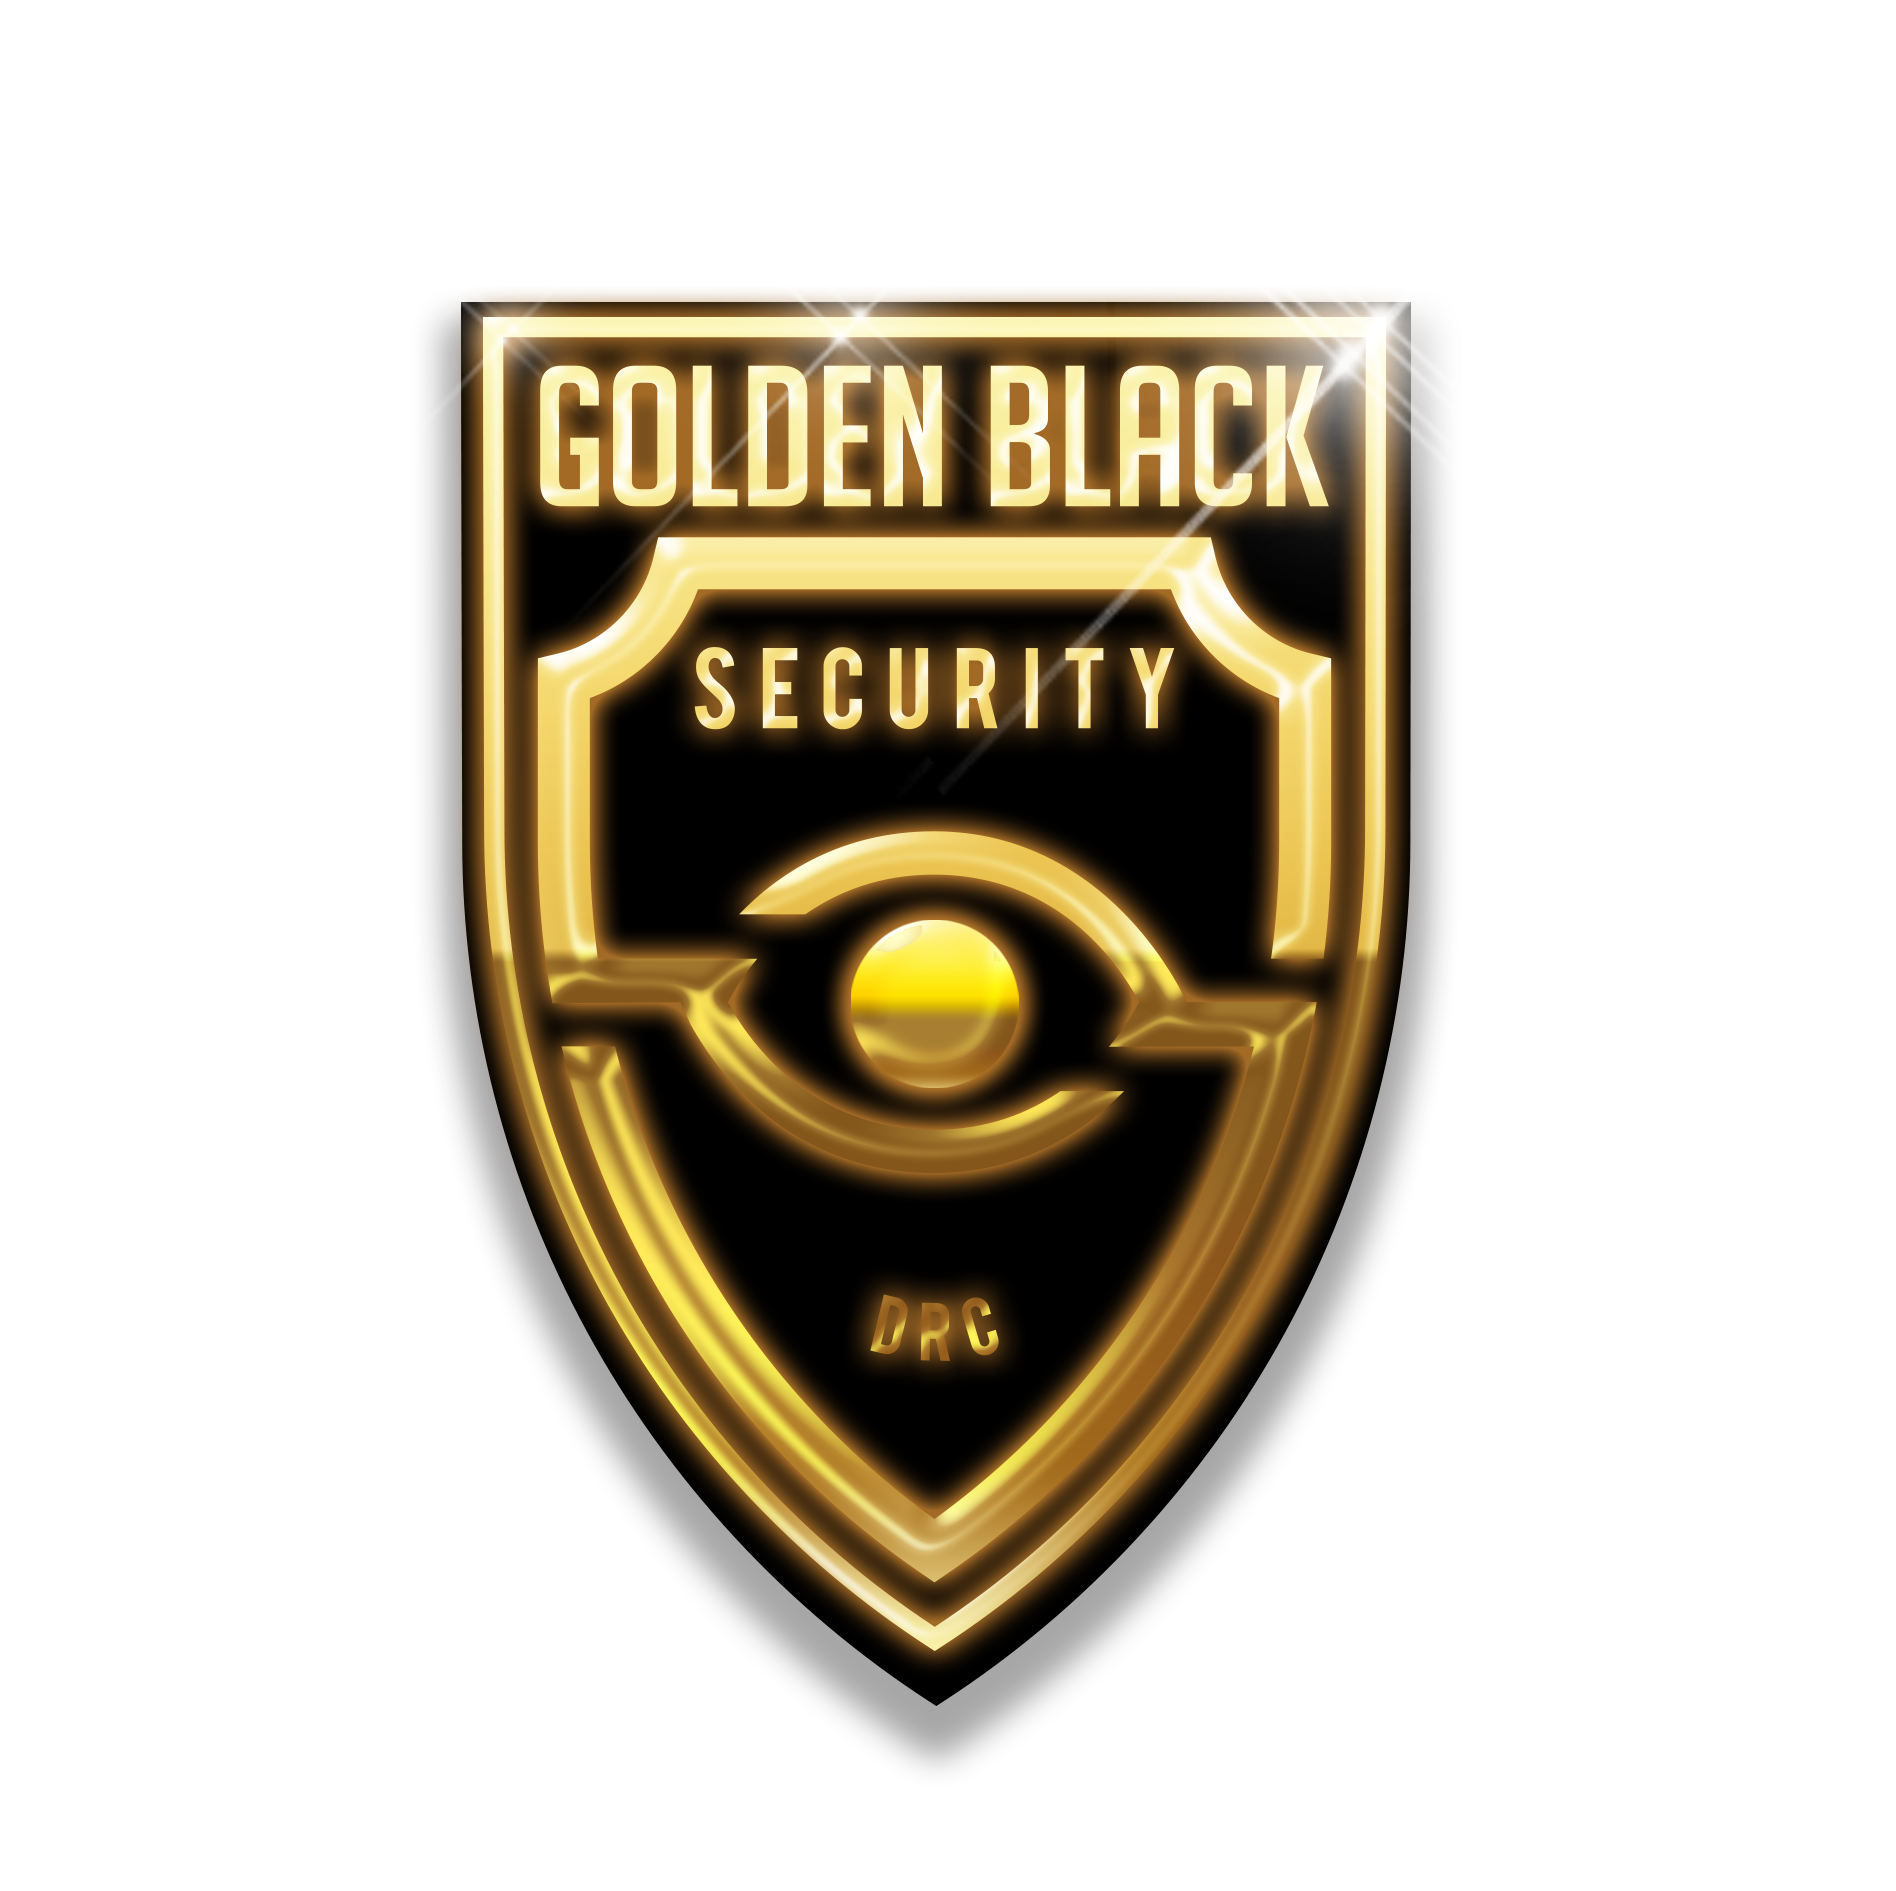 GOLDEN BLACK SECURITY